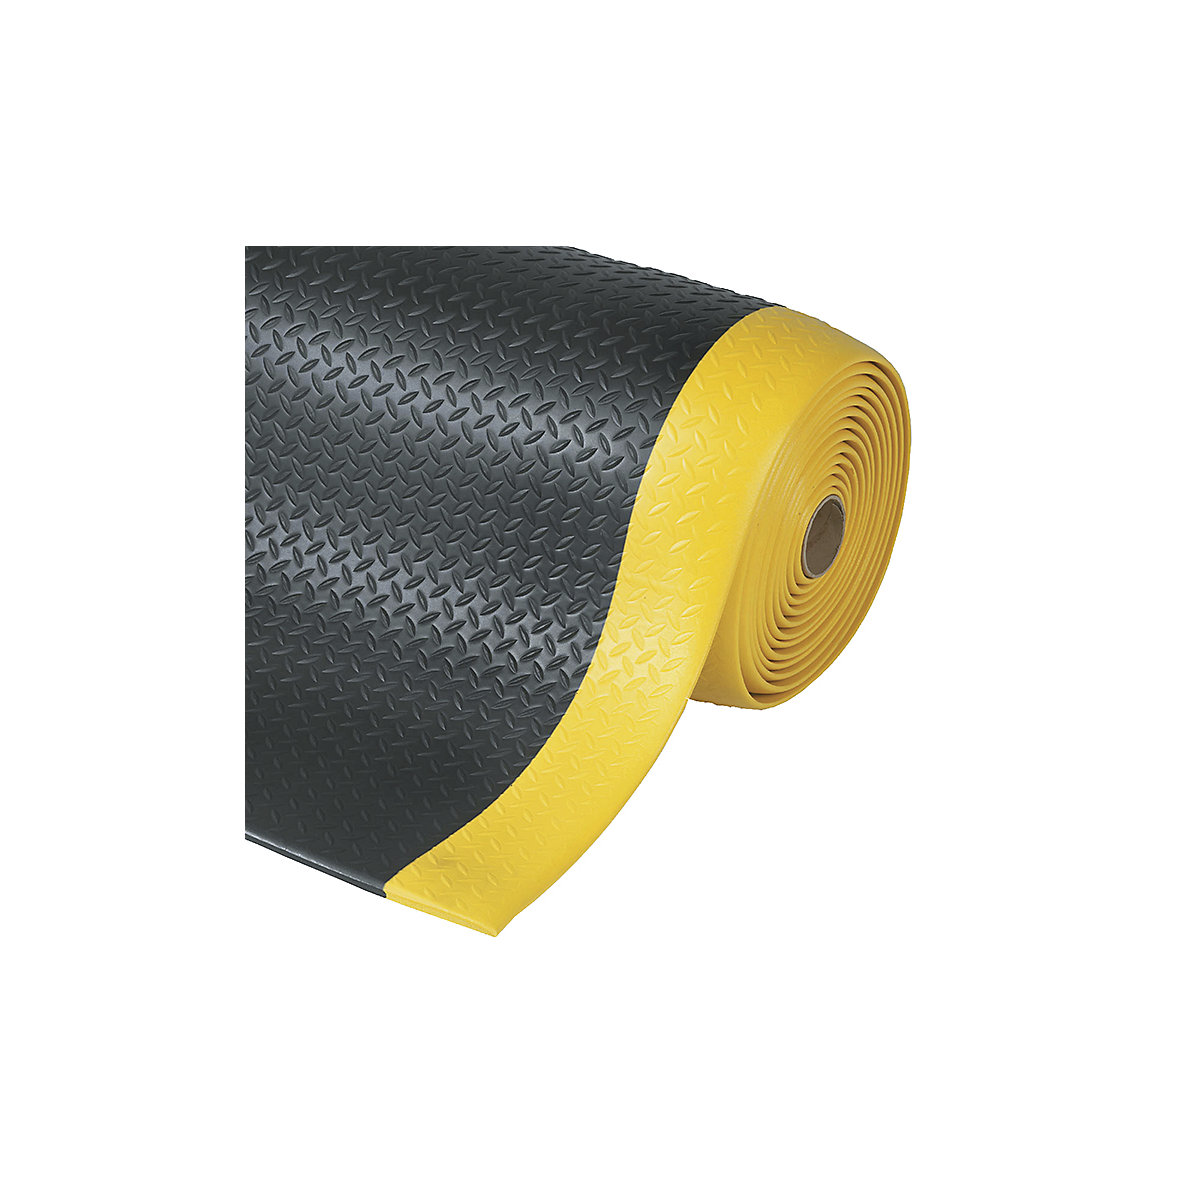 Werkplaatsmat, Diamond Sof-Tred™ – NOTRAX, breedte 600 mm, per str. m, zwart/geel-5